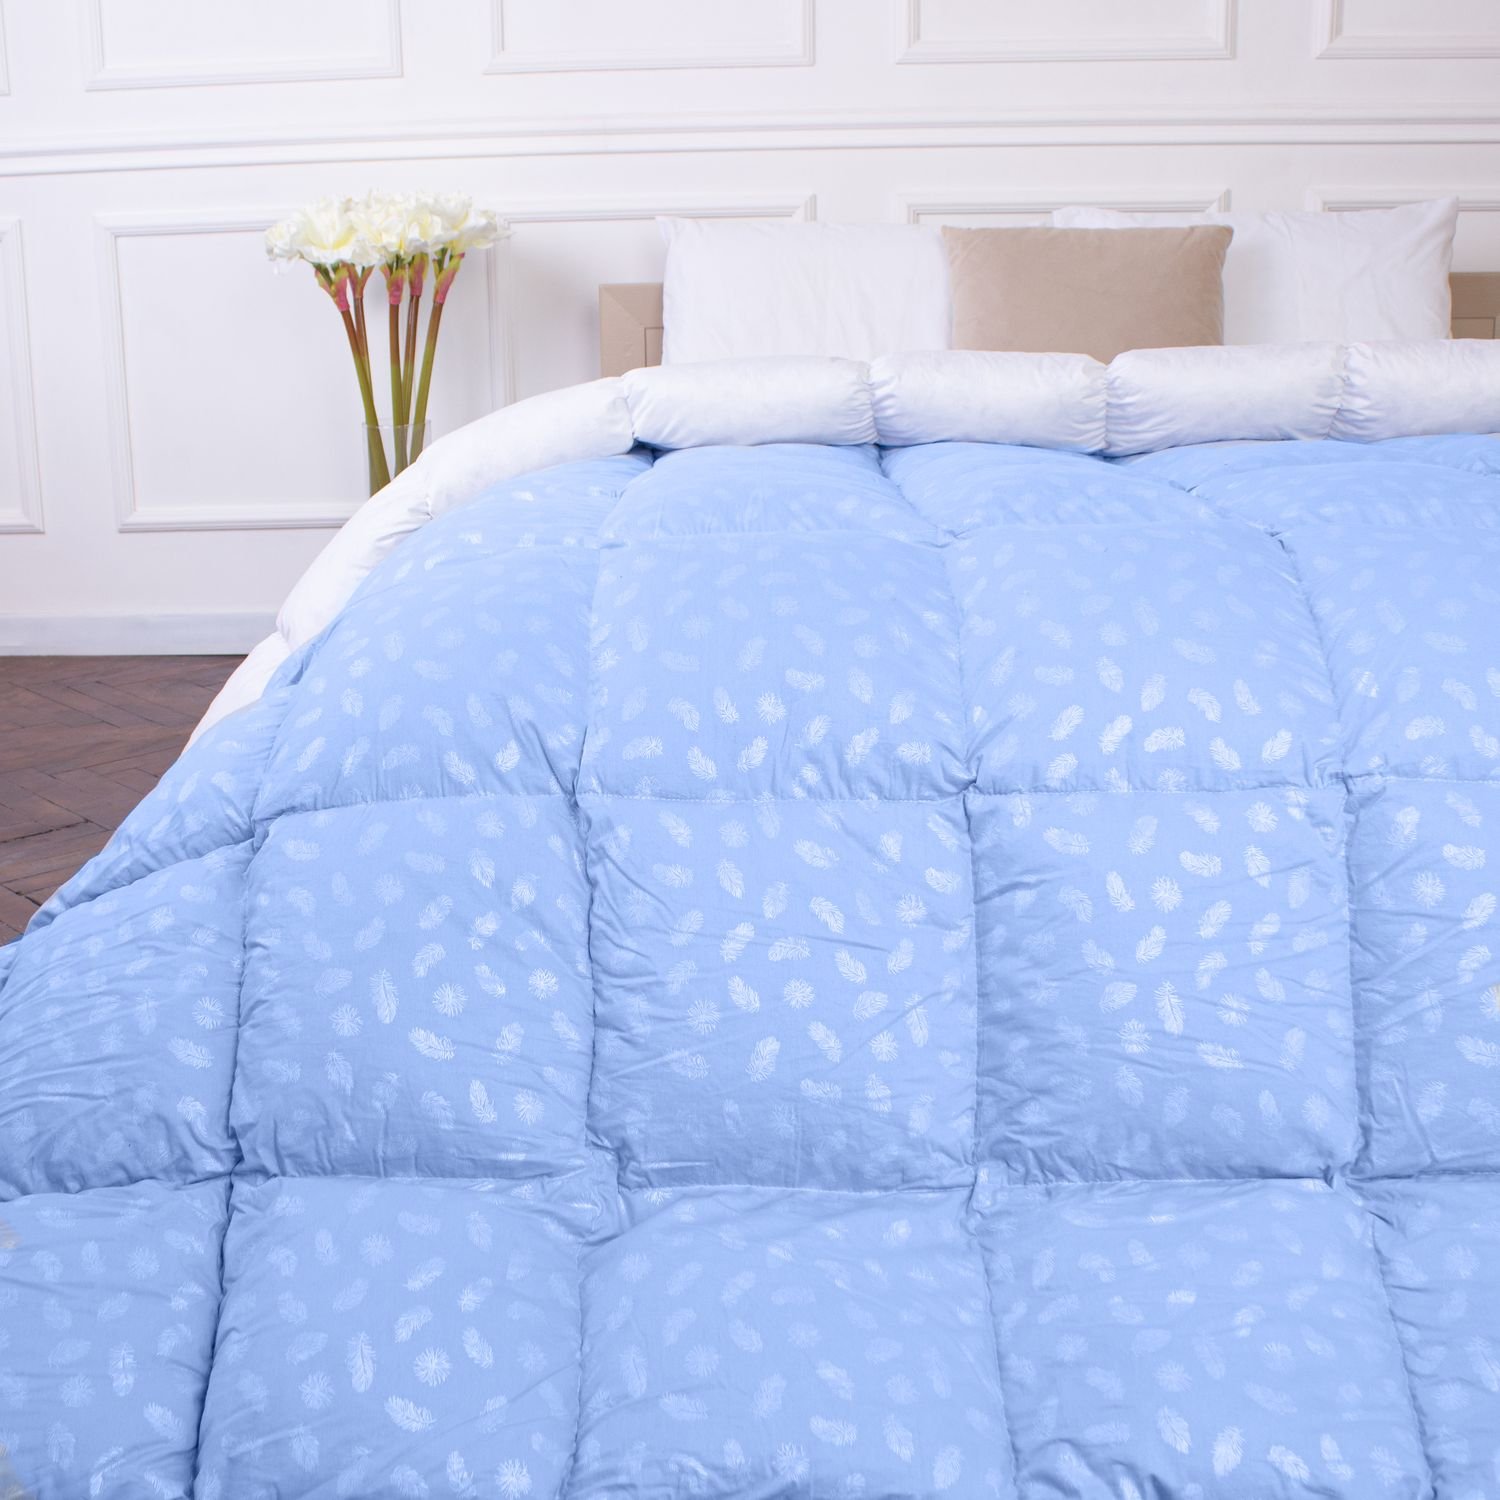 Одеяло пуховое MirSon Karmen №1840 Bio-Blue, 70% пух, евростандарт, 220x200, голубое (2200003013641) - фото 3